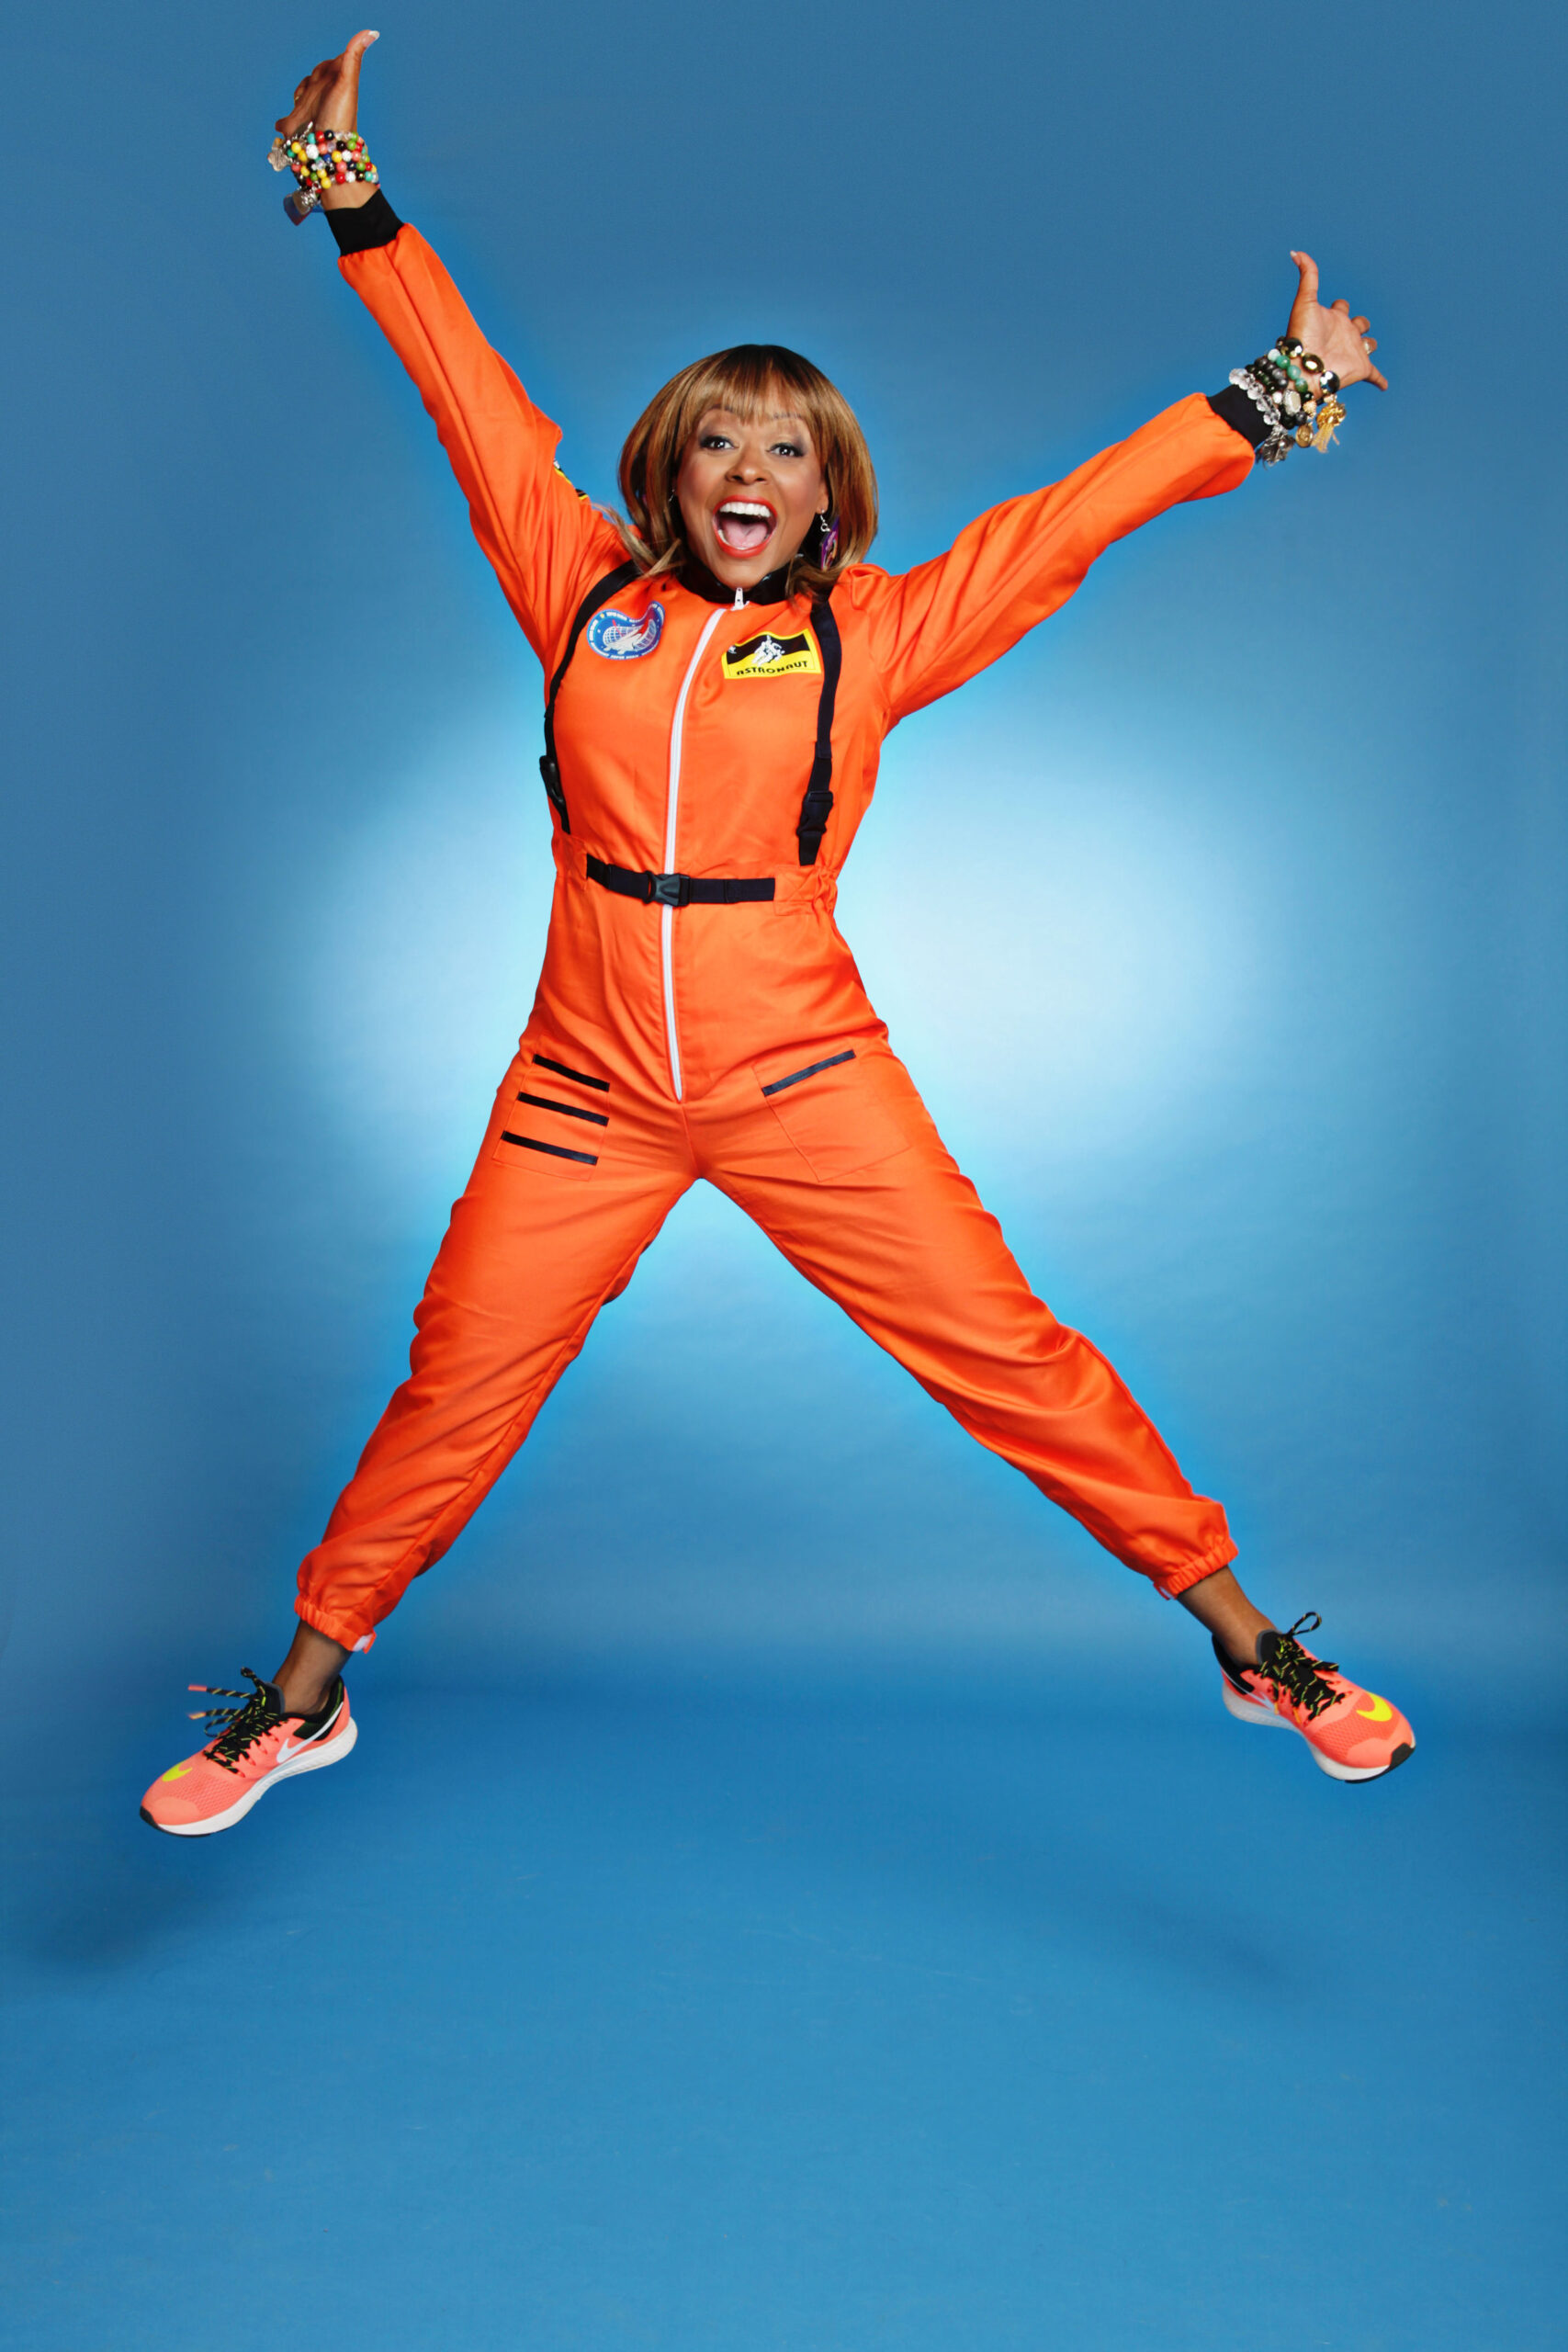 Sharon Caple Mcdougle jumping in orange flight suit